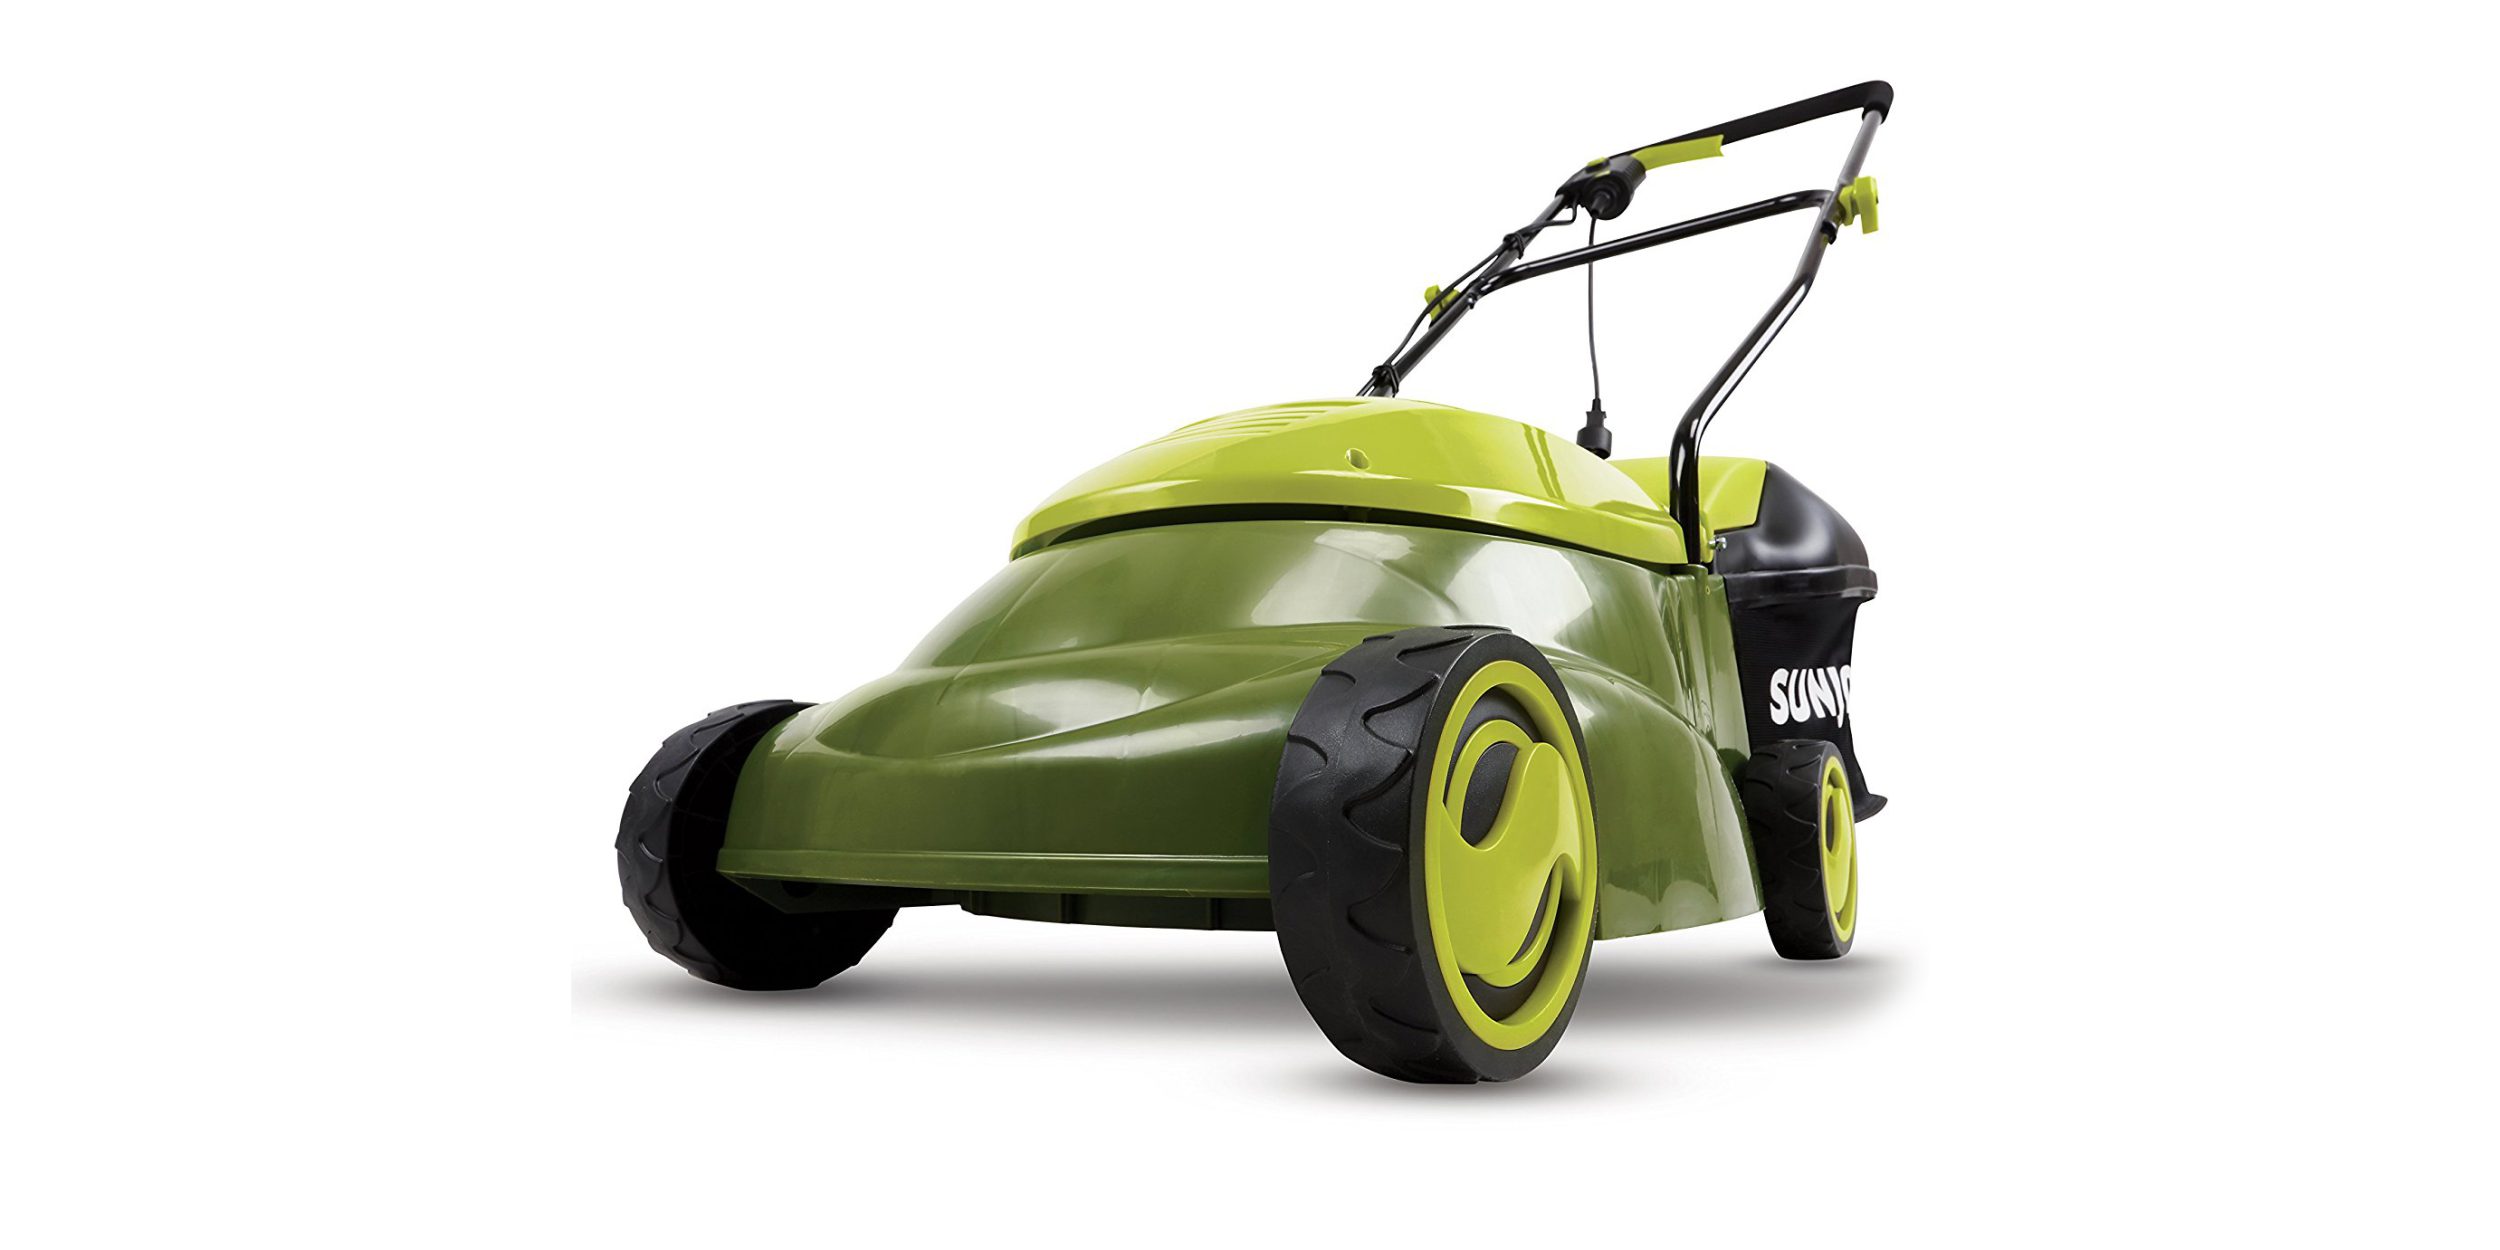 Green Deals: Sun Joe 14-inch 12A Electric Lawn Mower $69, more